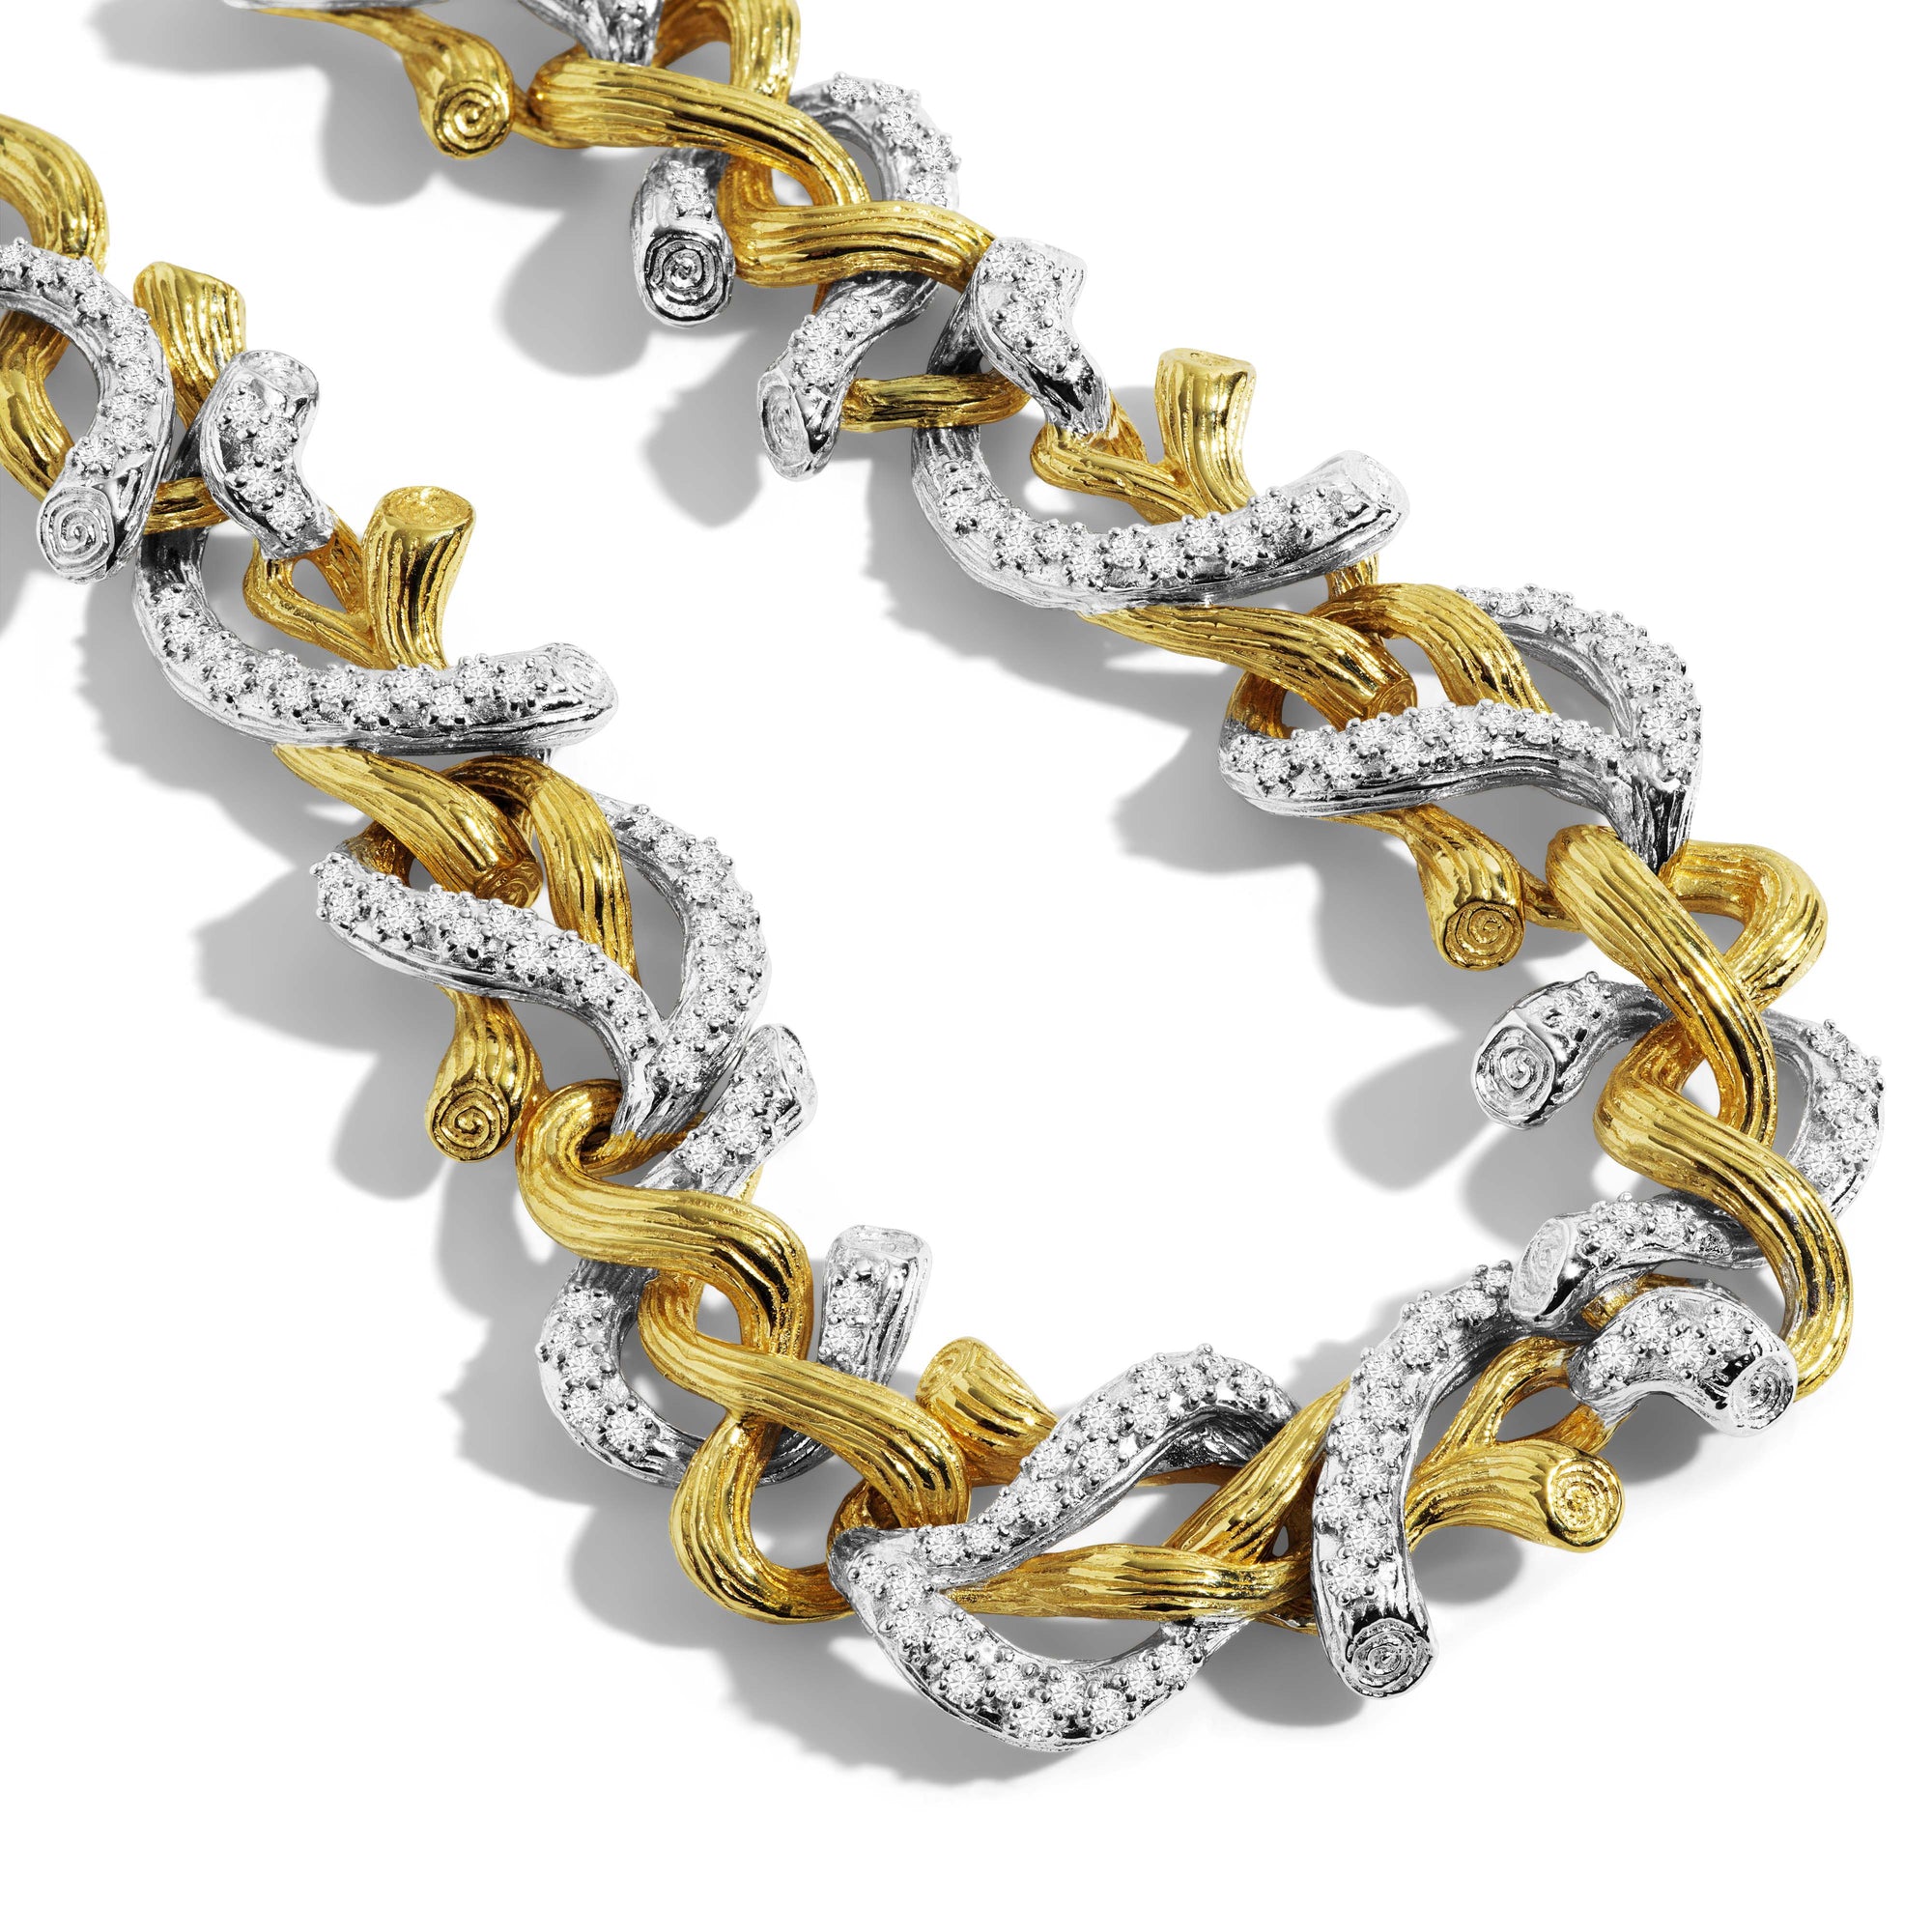 Michael Aram Branch Coral Bracelet with Diamonds